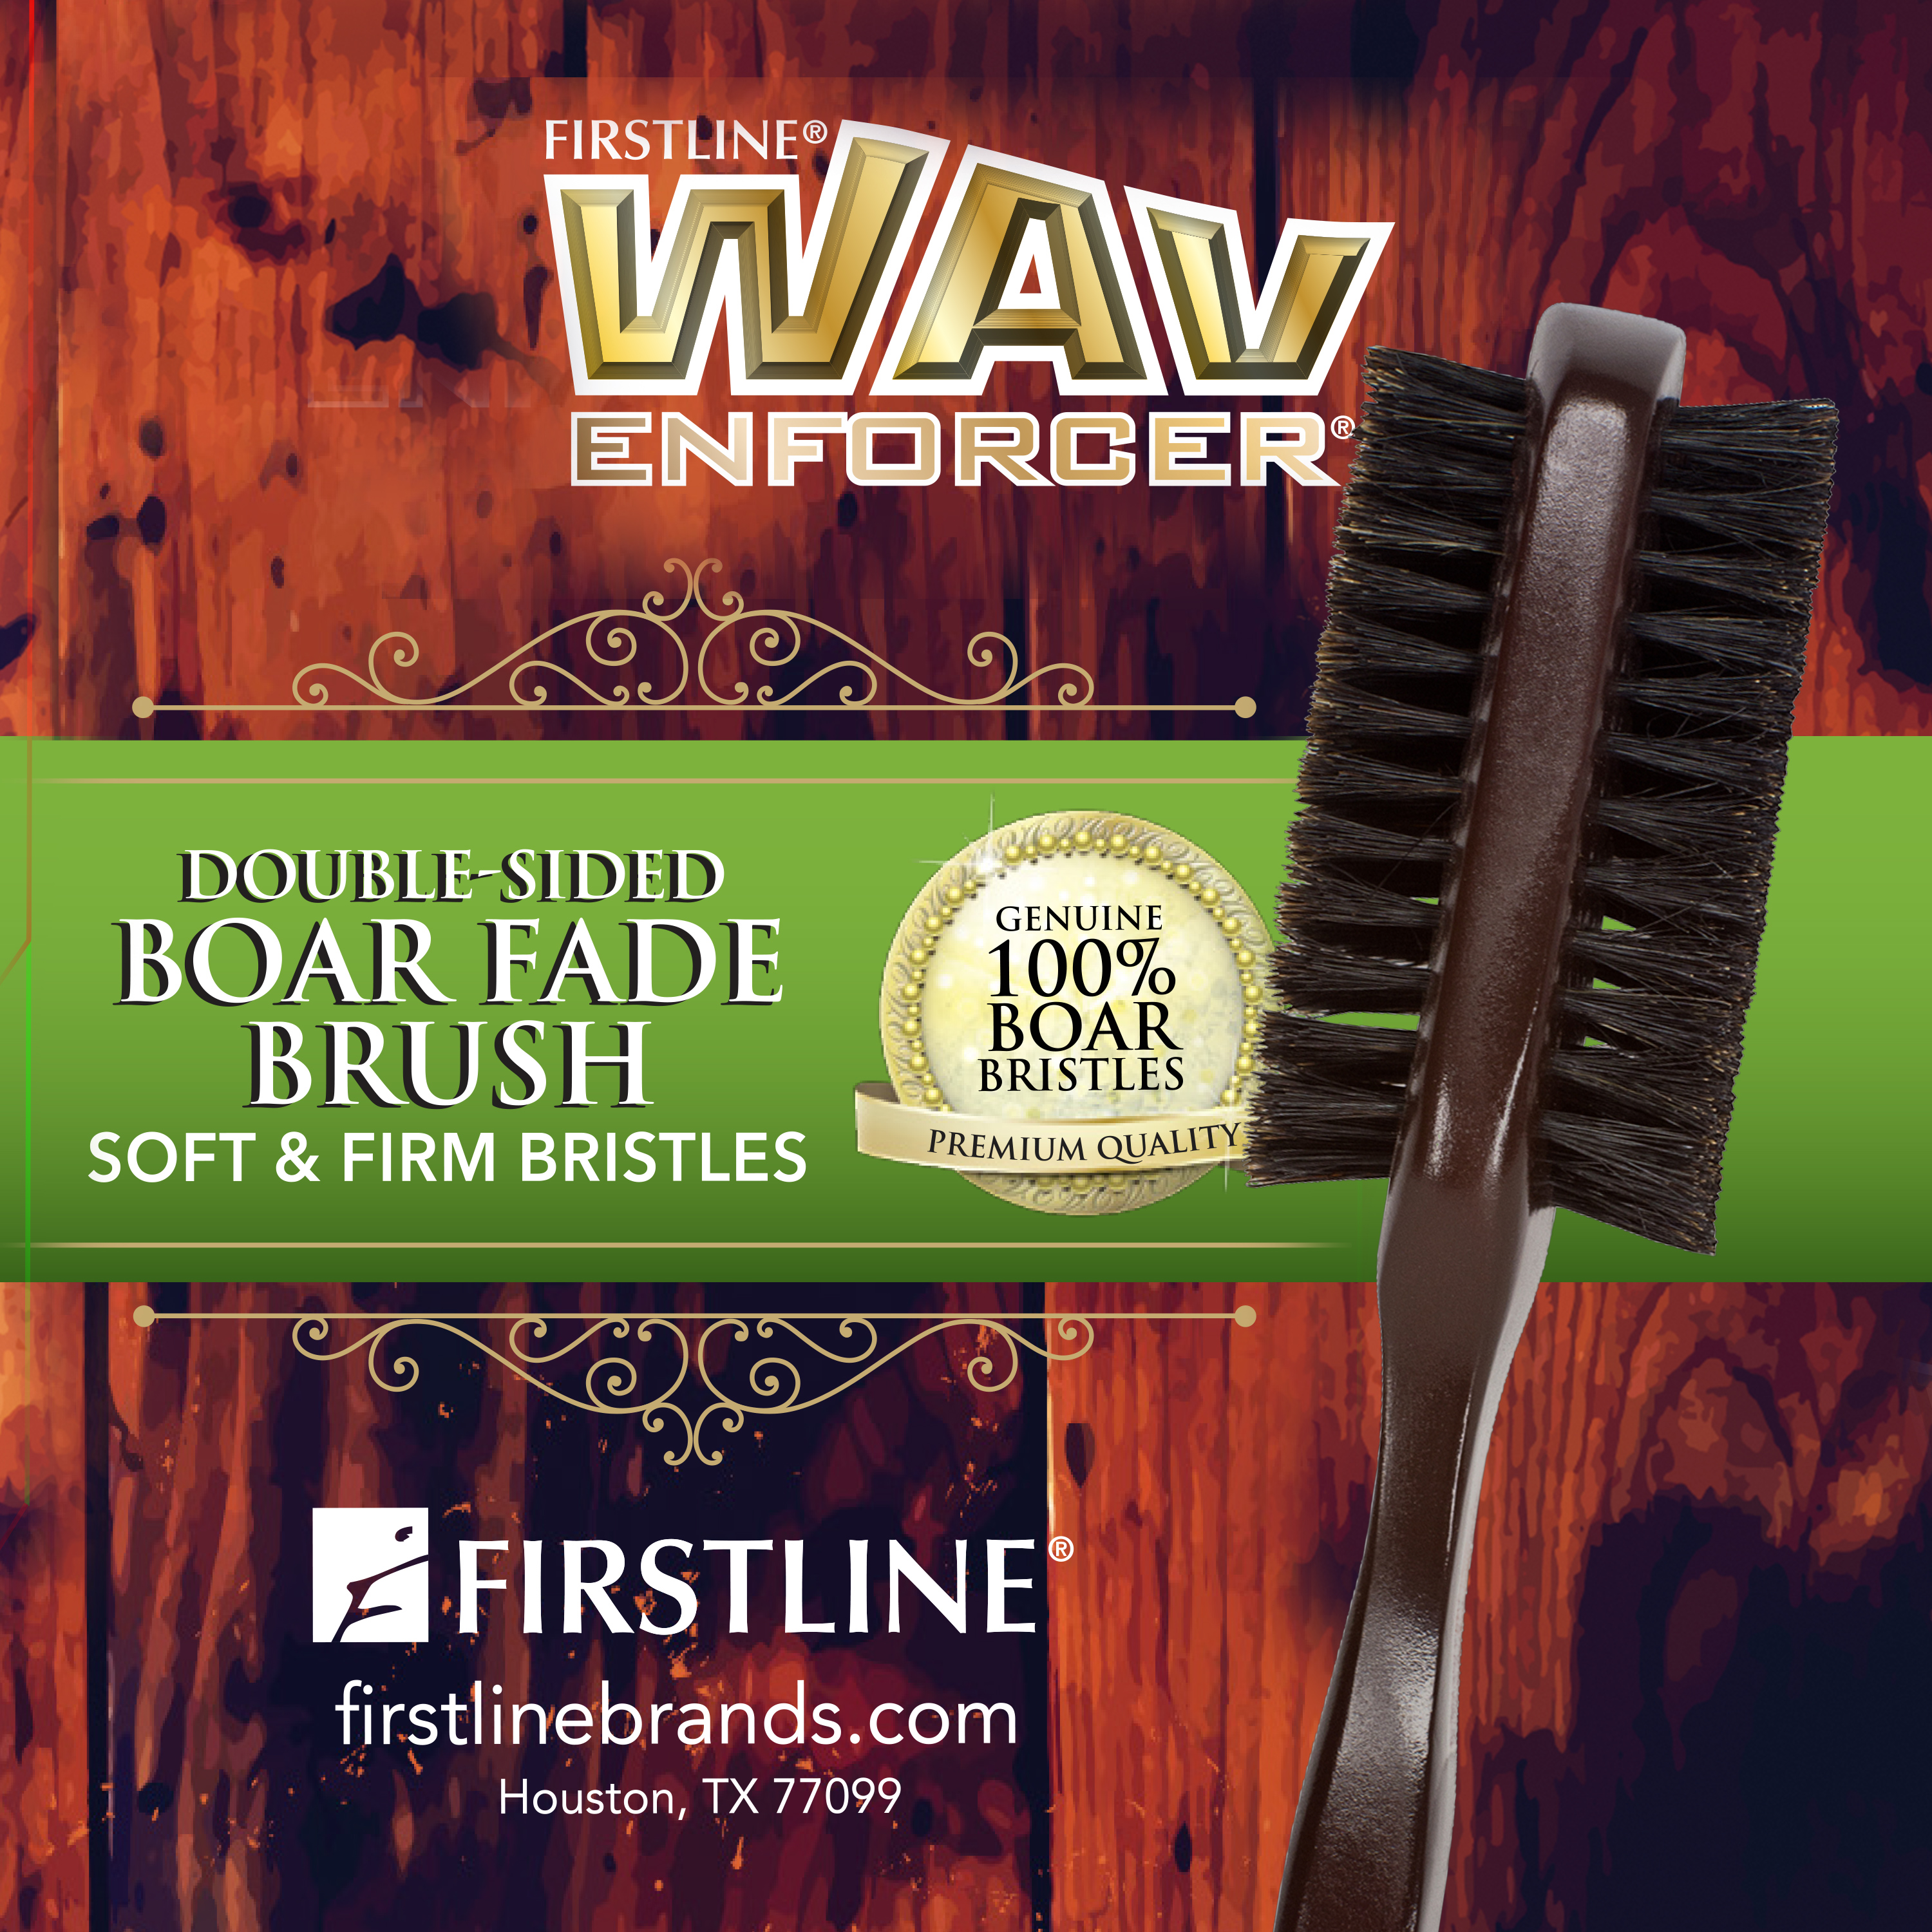 WavEnforcer Double-Sided Boar Fade Brush - image 2 of 5